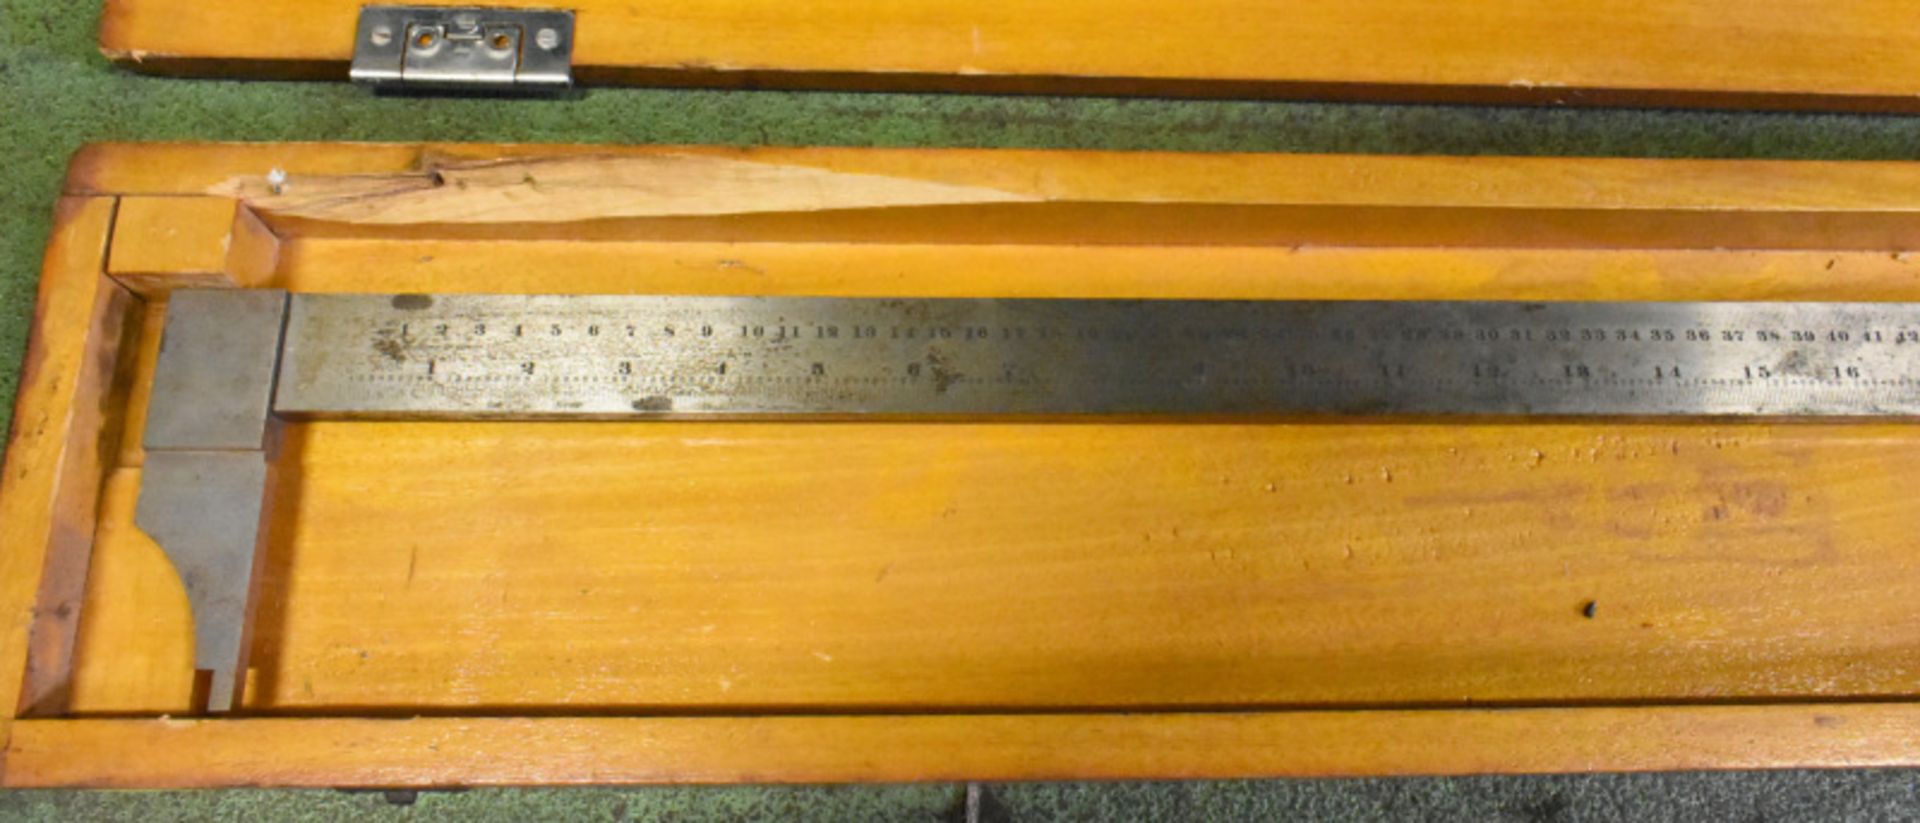 Chesterman large vernier caliper - imperial - Image 2 of 4